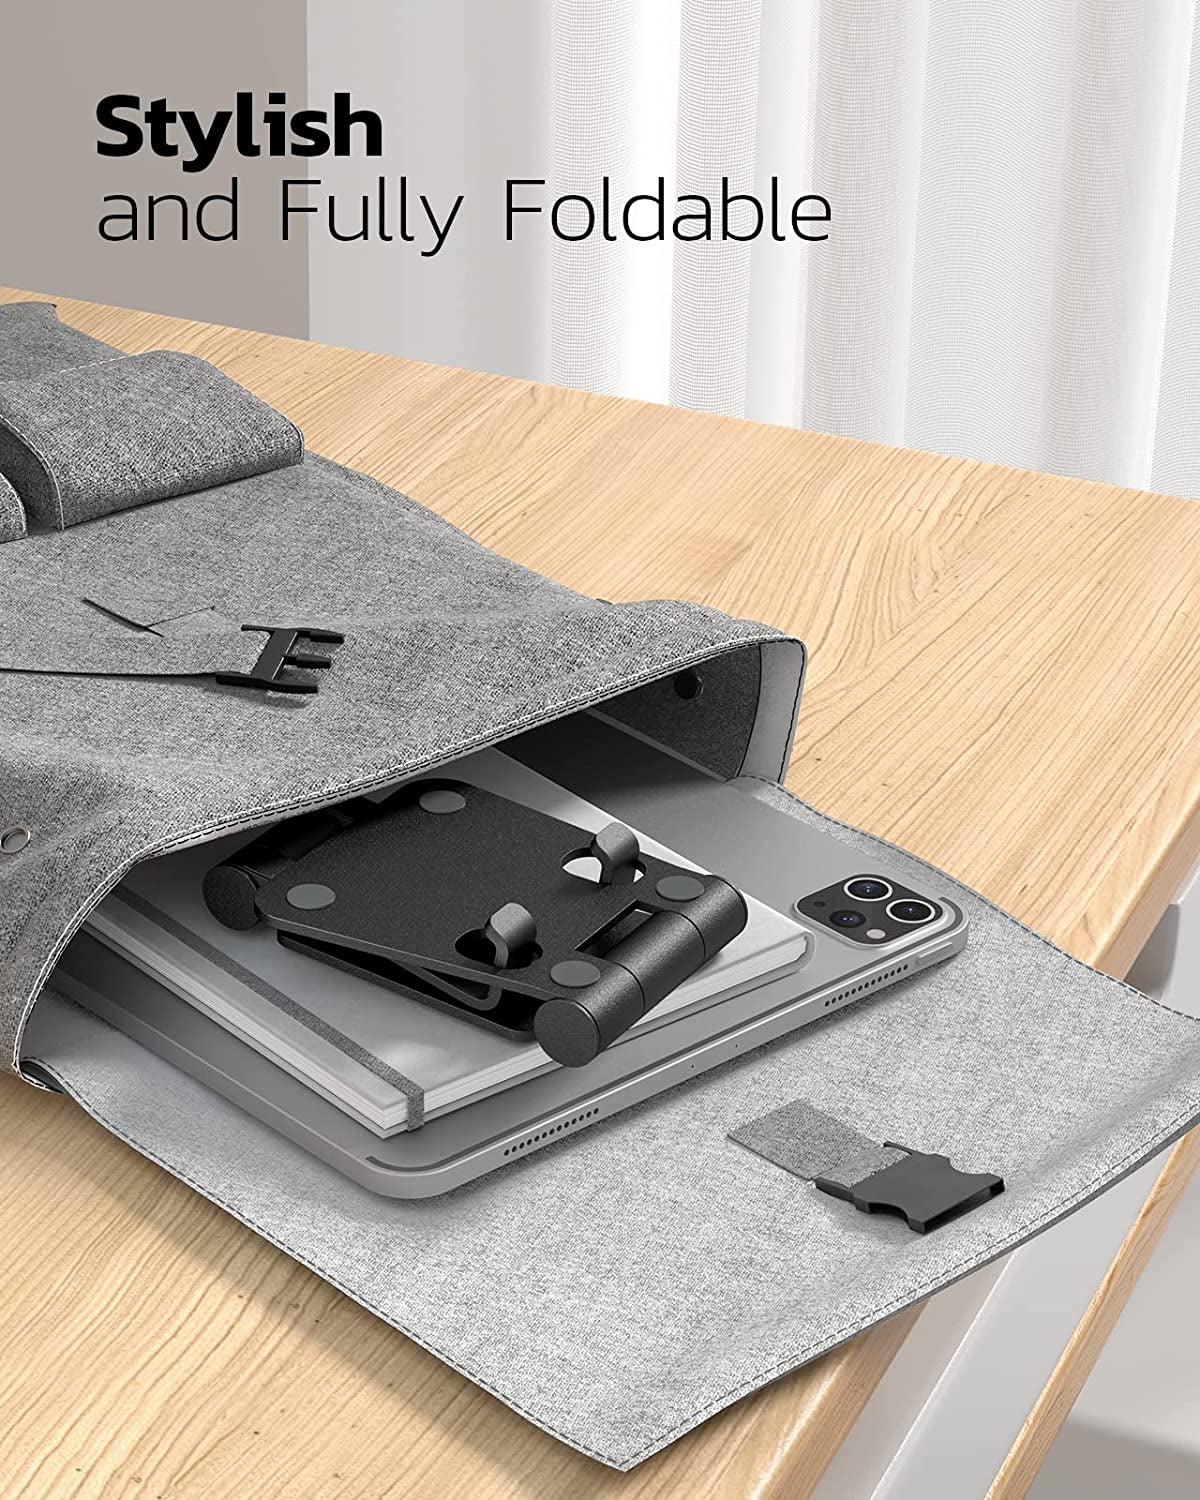 Adjustable Dual Folding Cell Phone Stand: Versatile Foldable Desktop Holder for Phones, Tablets, Nintendo Switch